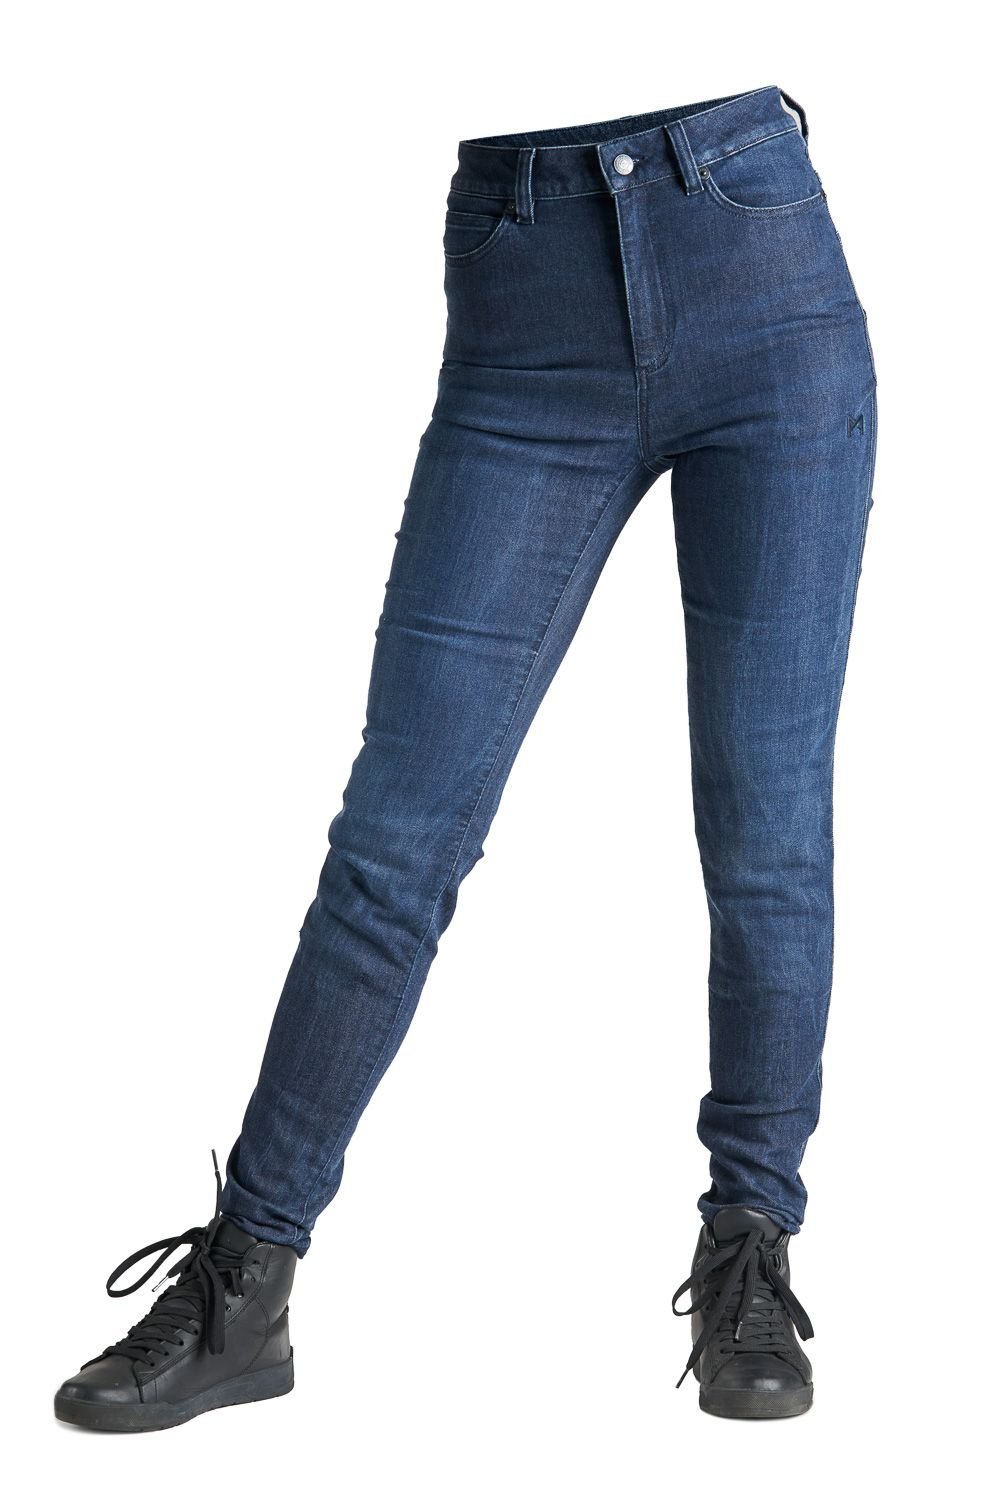 Image of Pando Moto Kusari Cor 02 Women Motorcycle Jeans Skinny-Fit Cordura Talla W28/L32